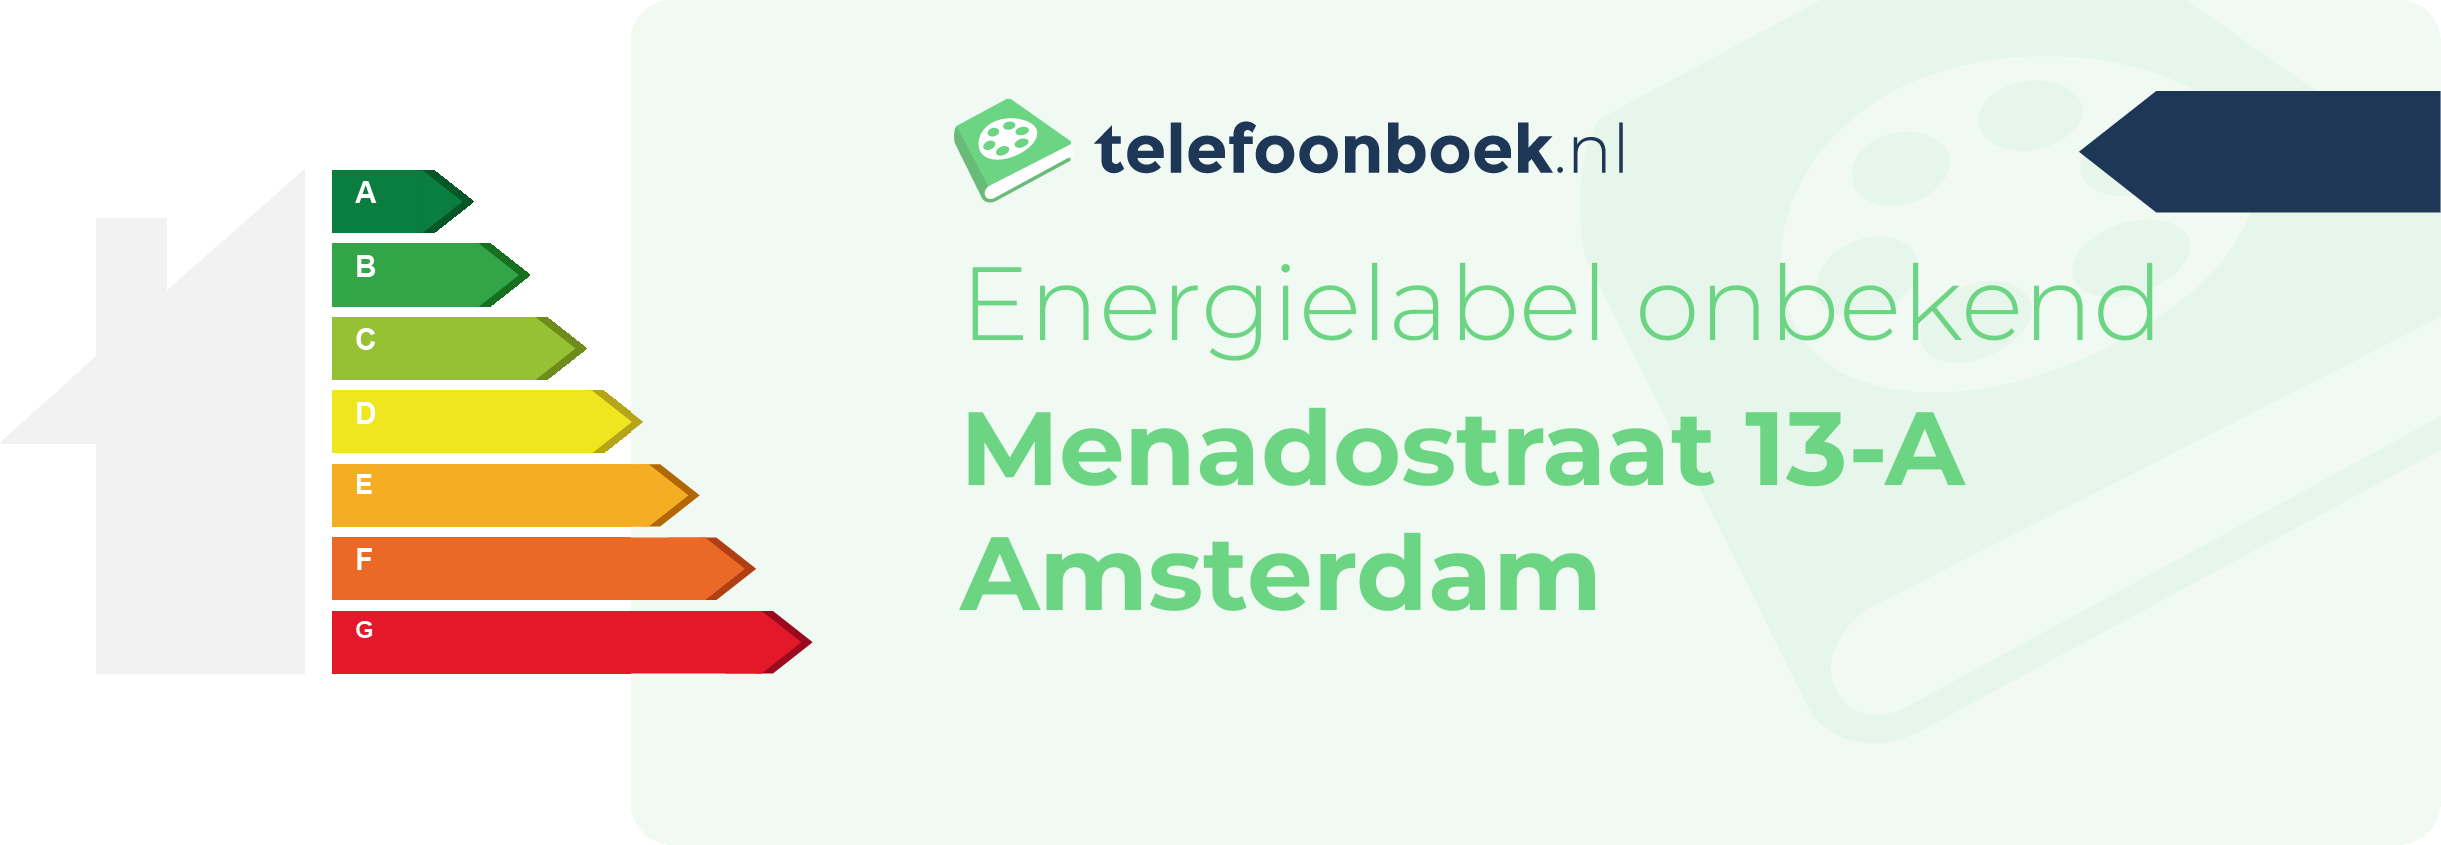 Energielabel Menadostraat 13-A Amsterdam